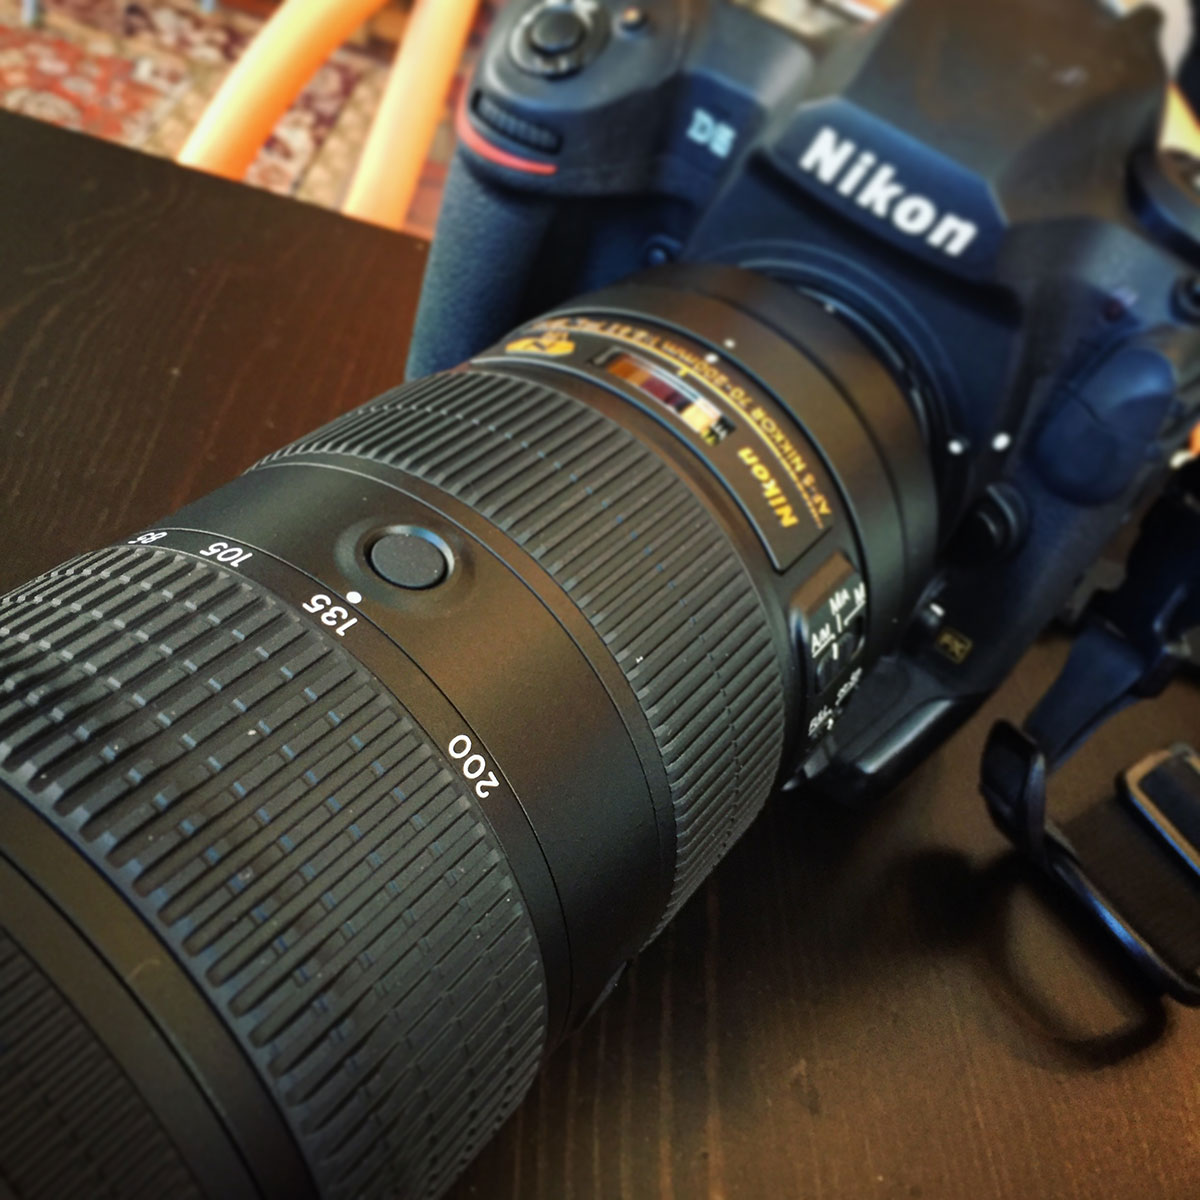 The new Nikon 70-200mm f/2.8E FL ED VR and Voigtlander Nokton 58mm 